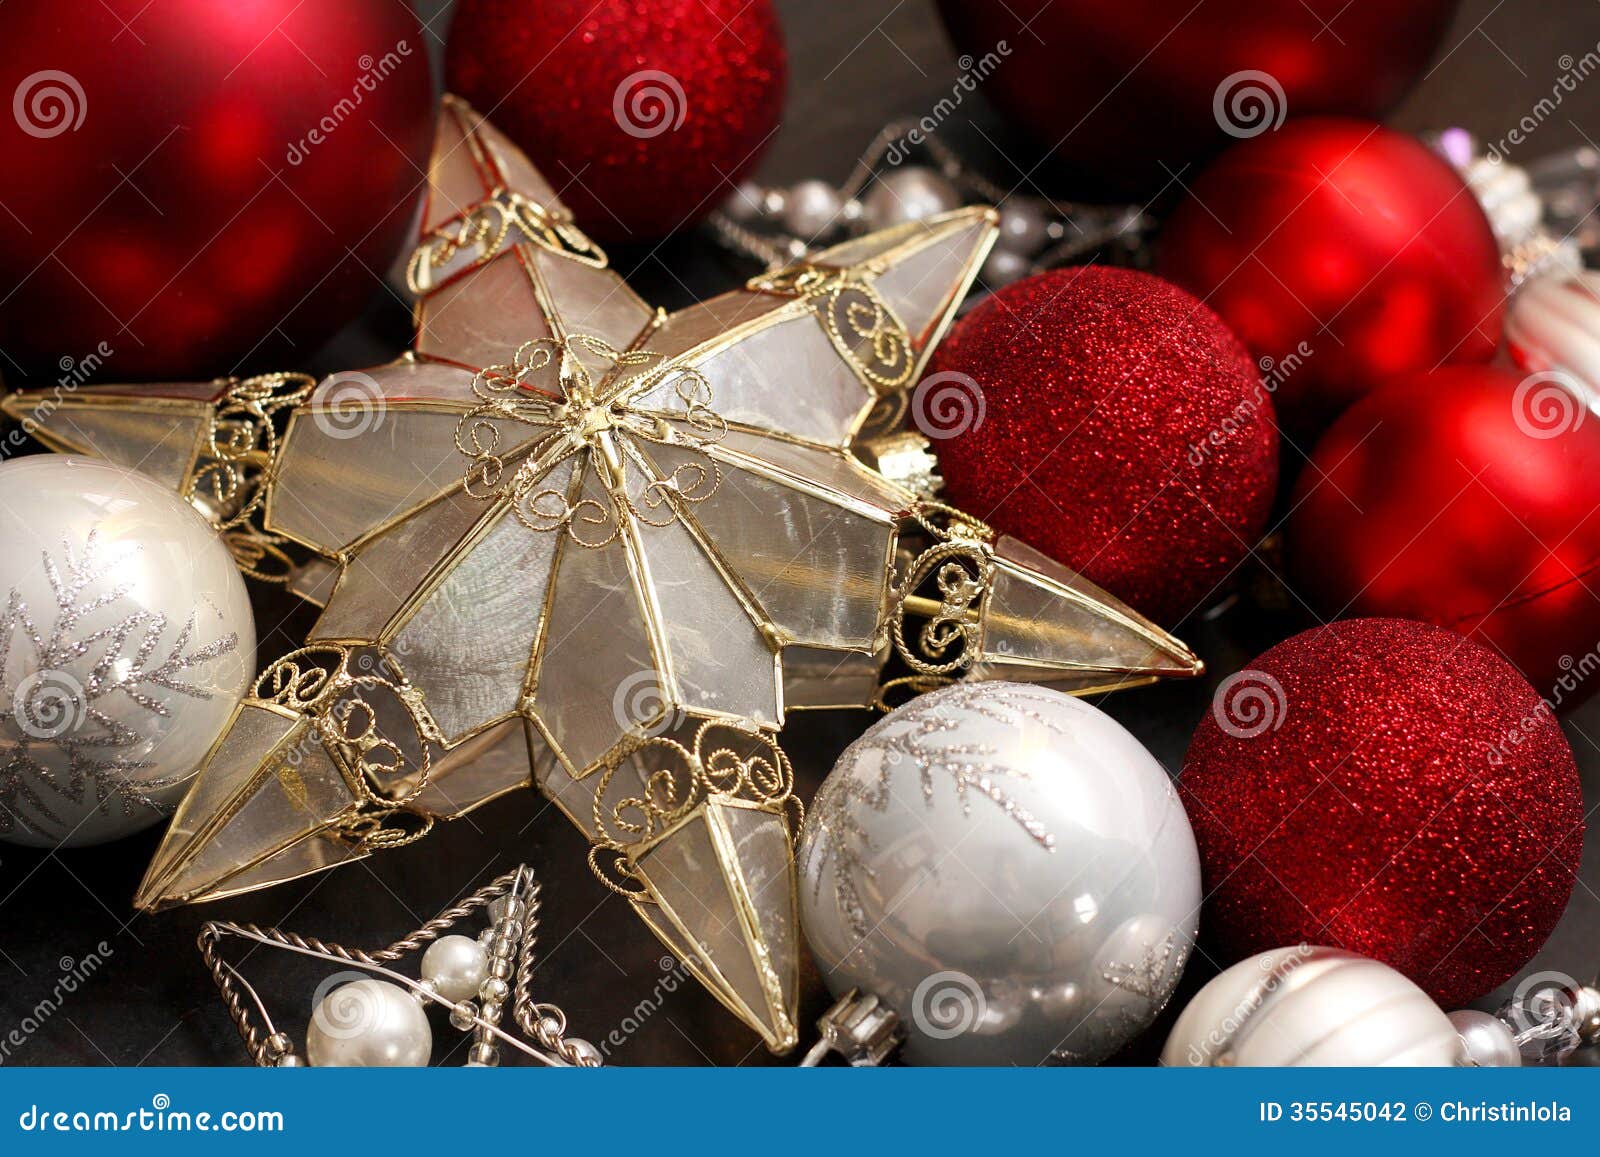 Gold Christmas Tree Star And Red Bulbs Stock Photo - Image of sparkles, season: 35545042